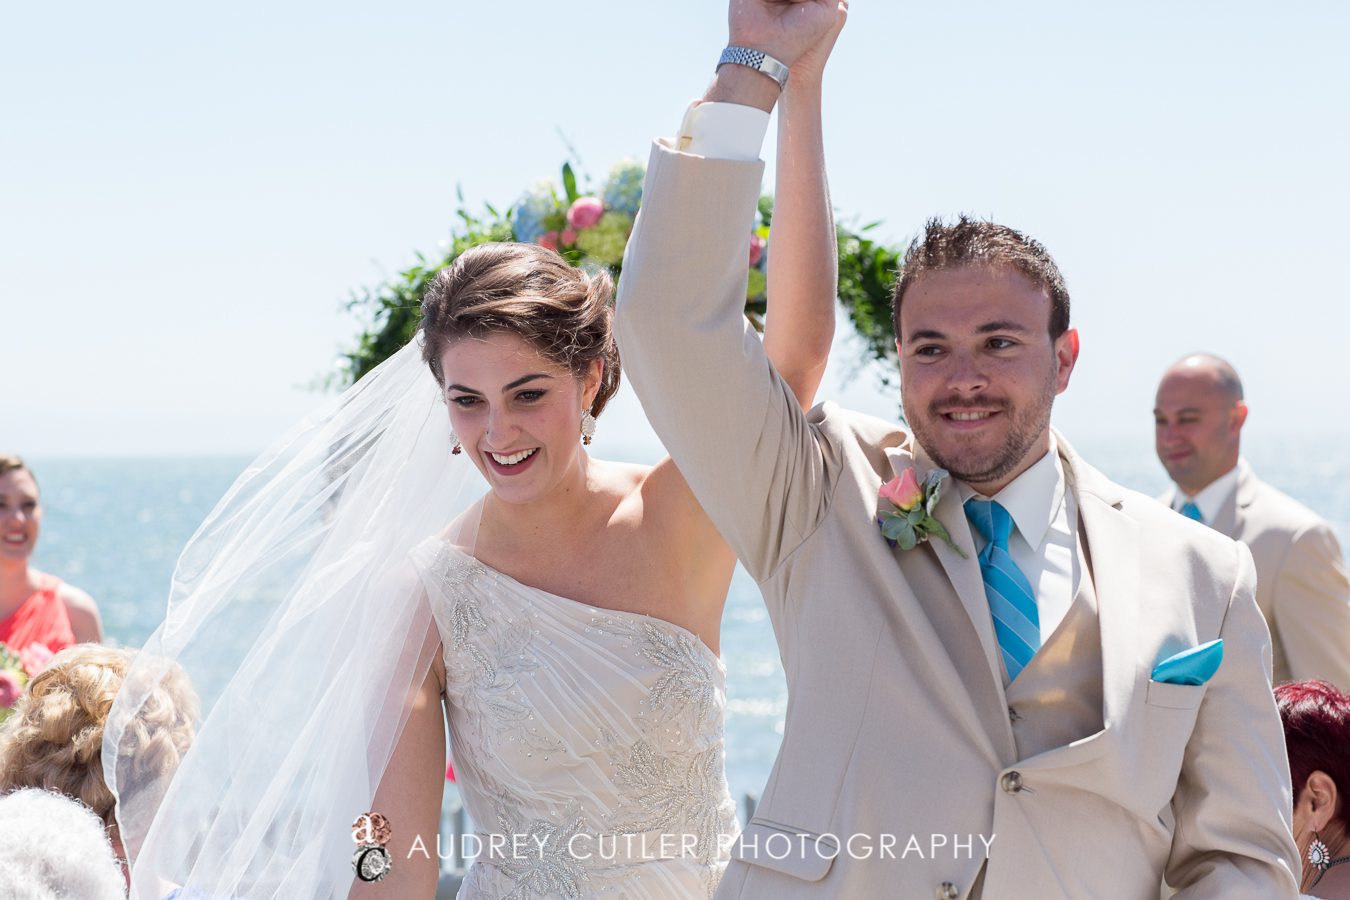 The Corsair and Crossrip - Cape Cod - Dennis Port, Massachusetts Wedding Photographers - © Audrey Cutler Photography 2014